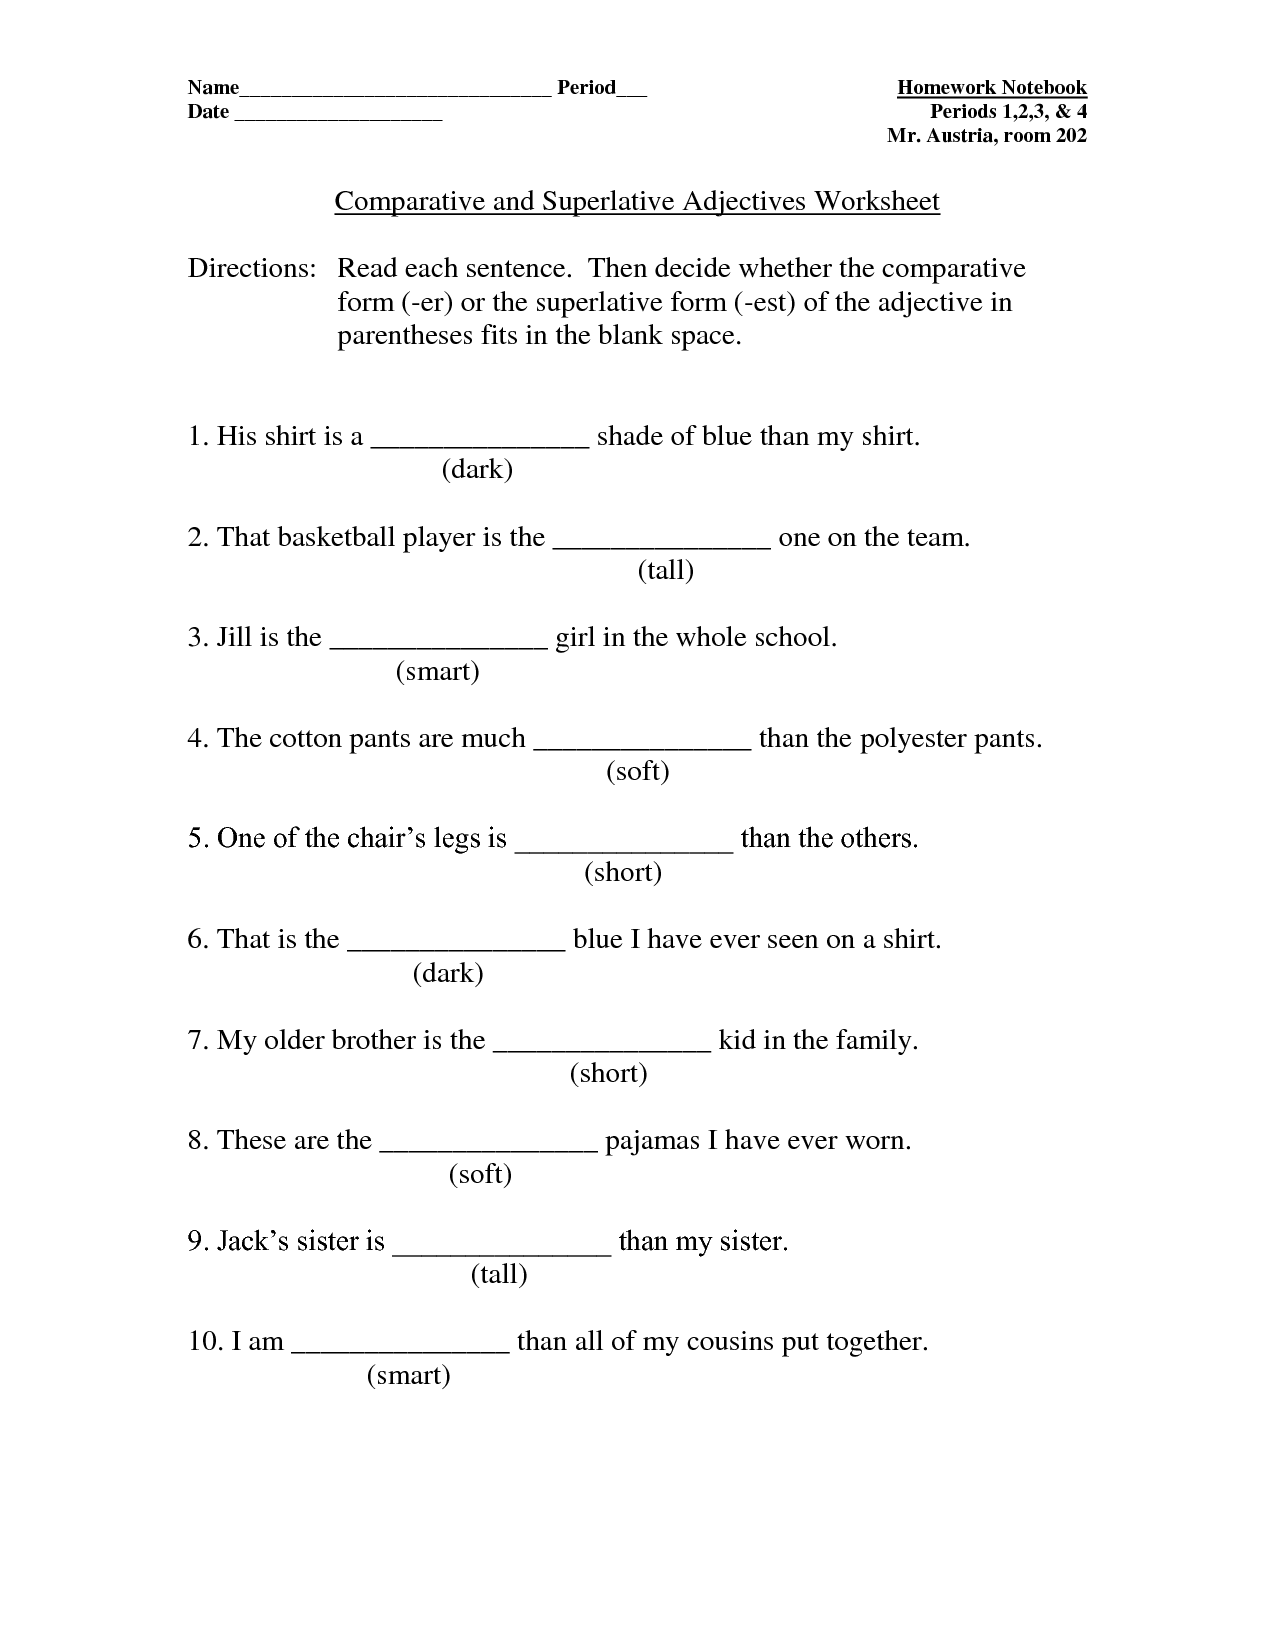 15 Best Images Of Pronoun Worksheets PDF Relative Pronouns Worksheets Direct Object Pronouns